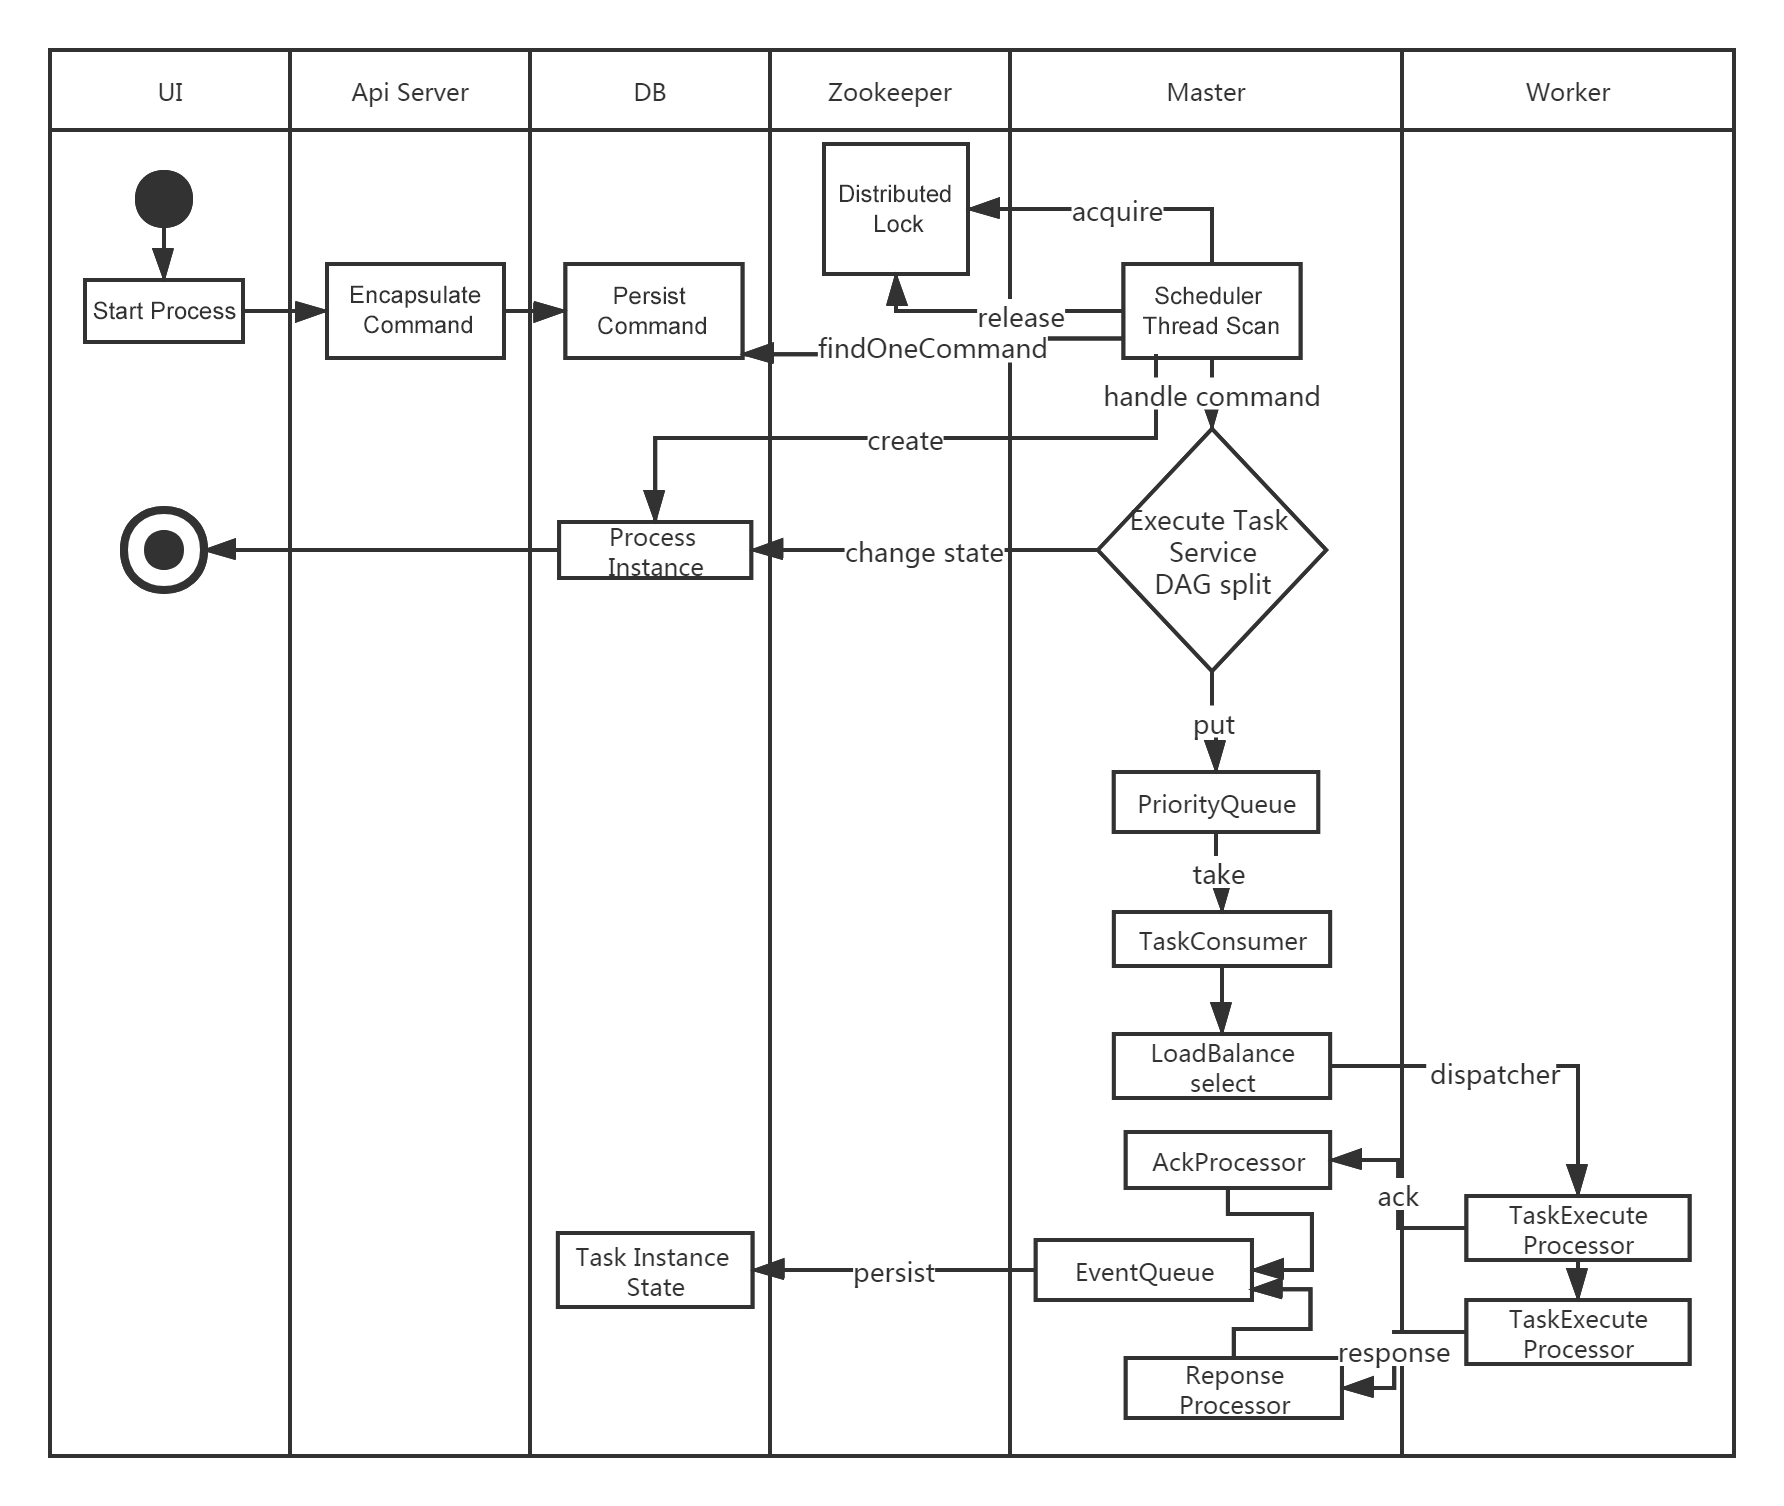 Start process activity diagram